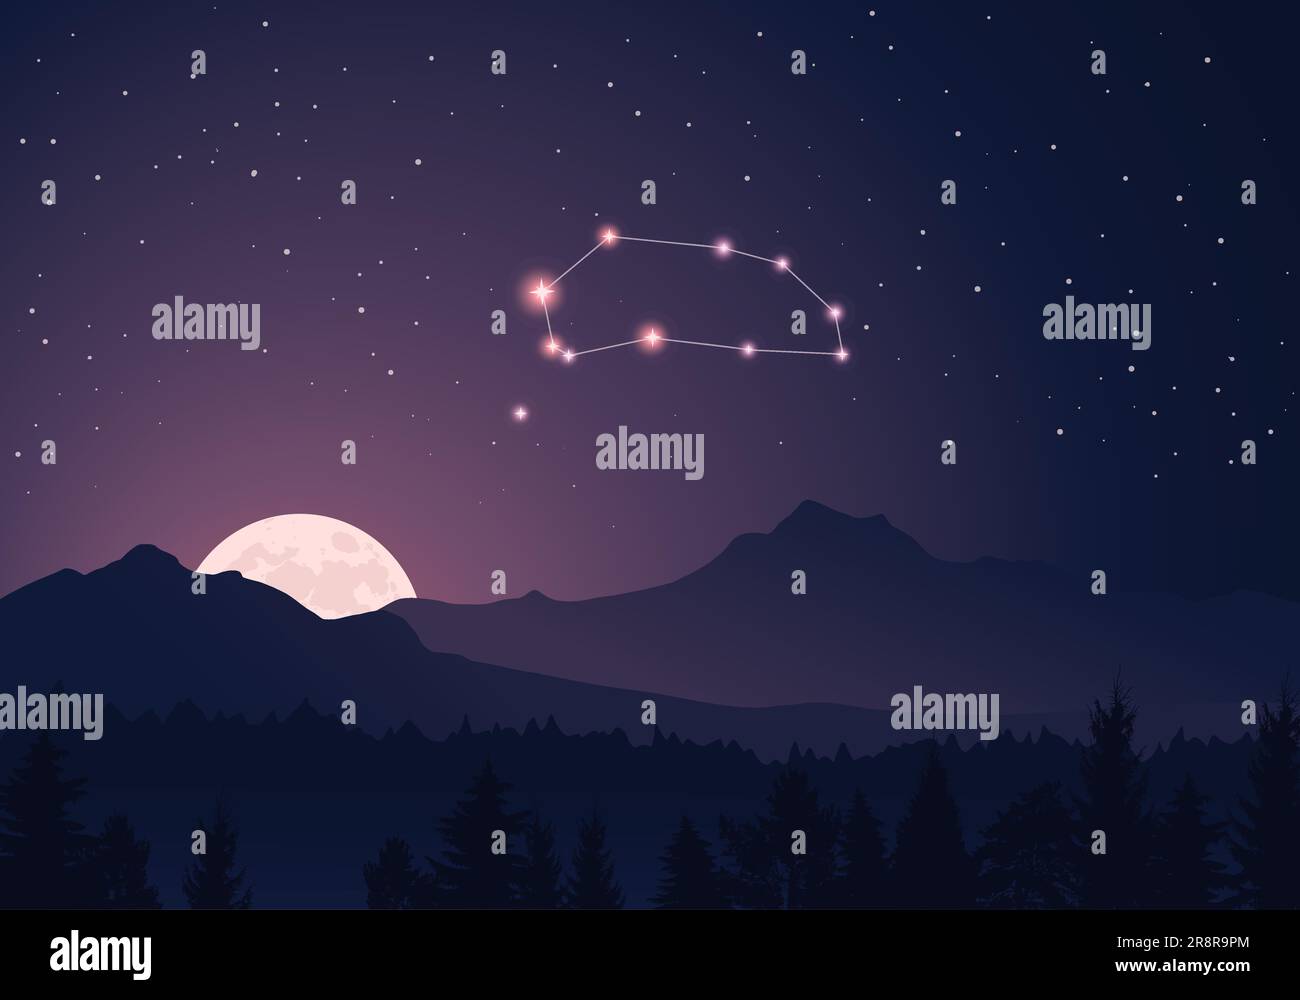 Constellation Piscis Austrinus in dark starry sky Stock Vector